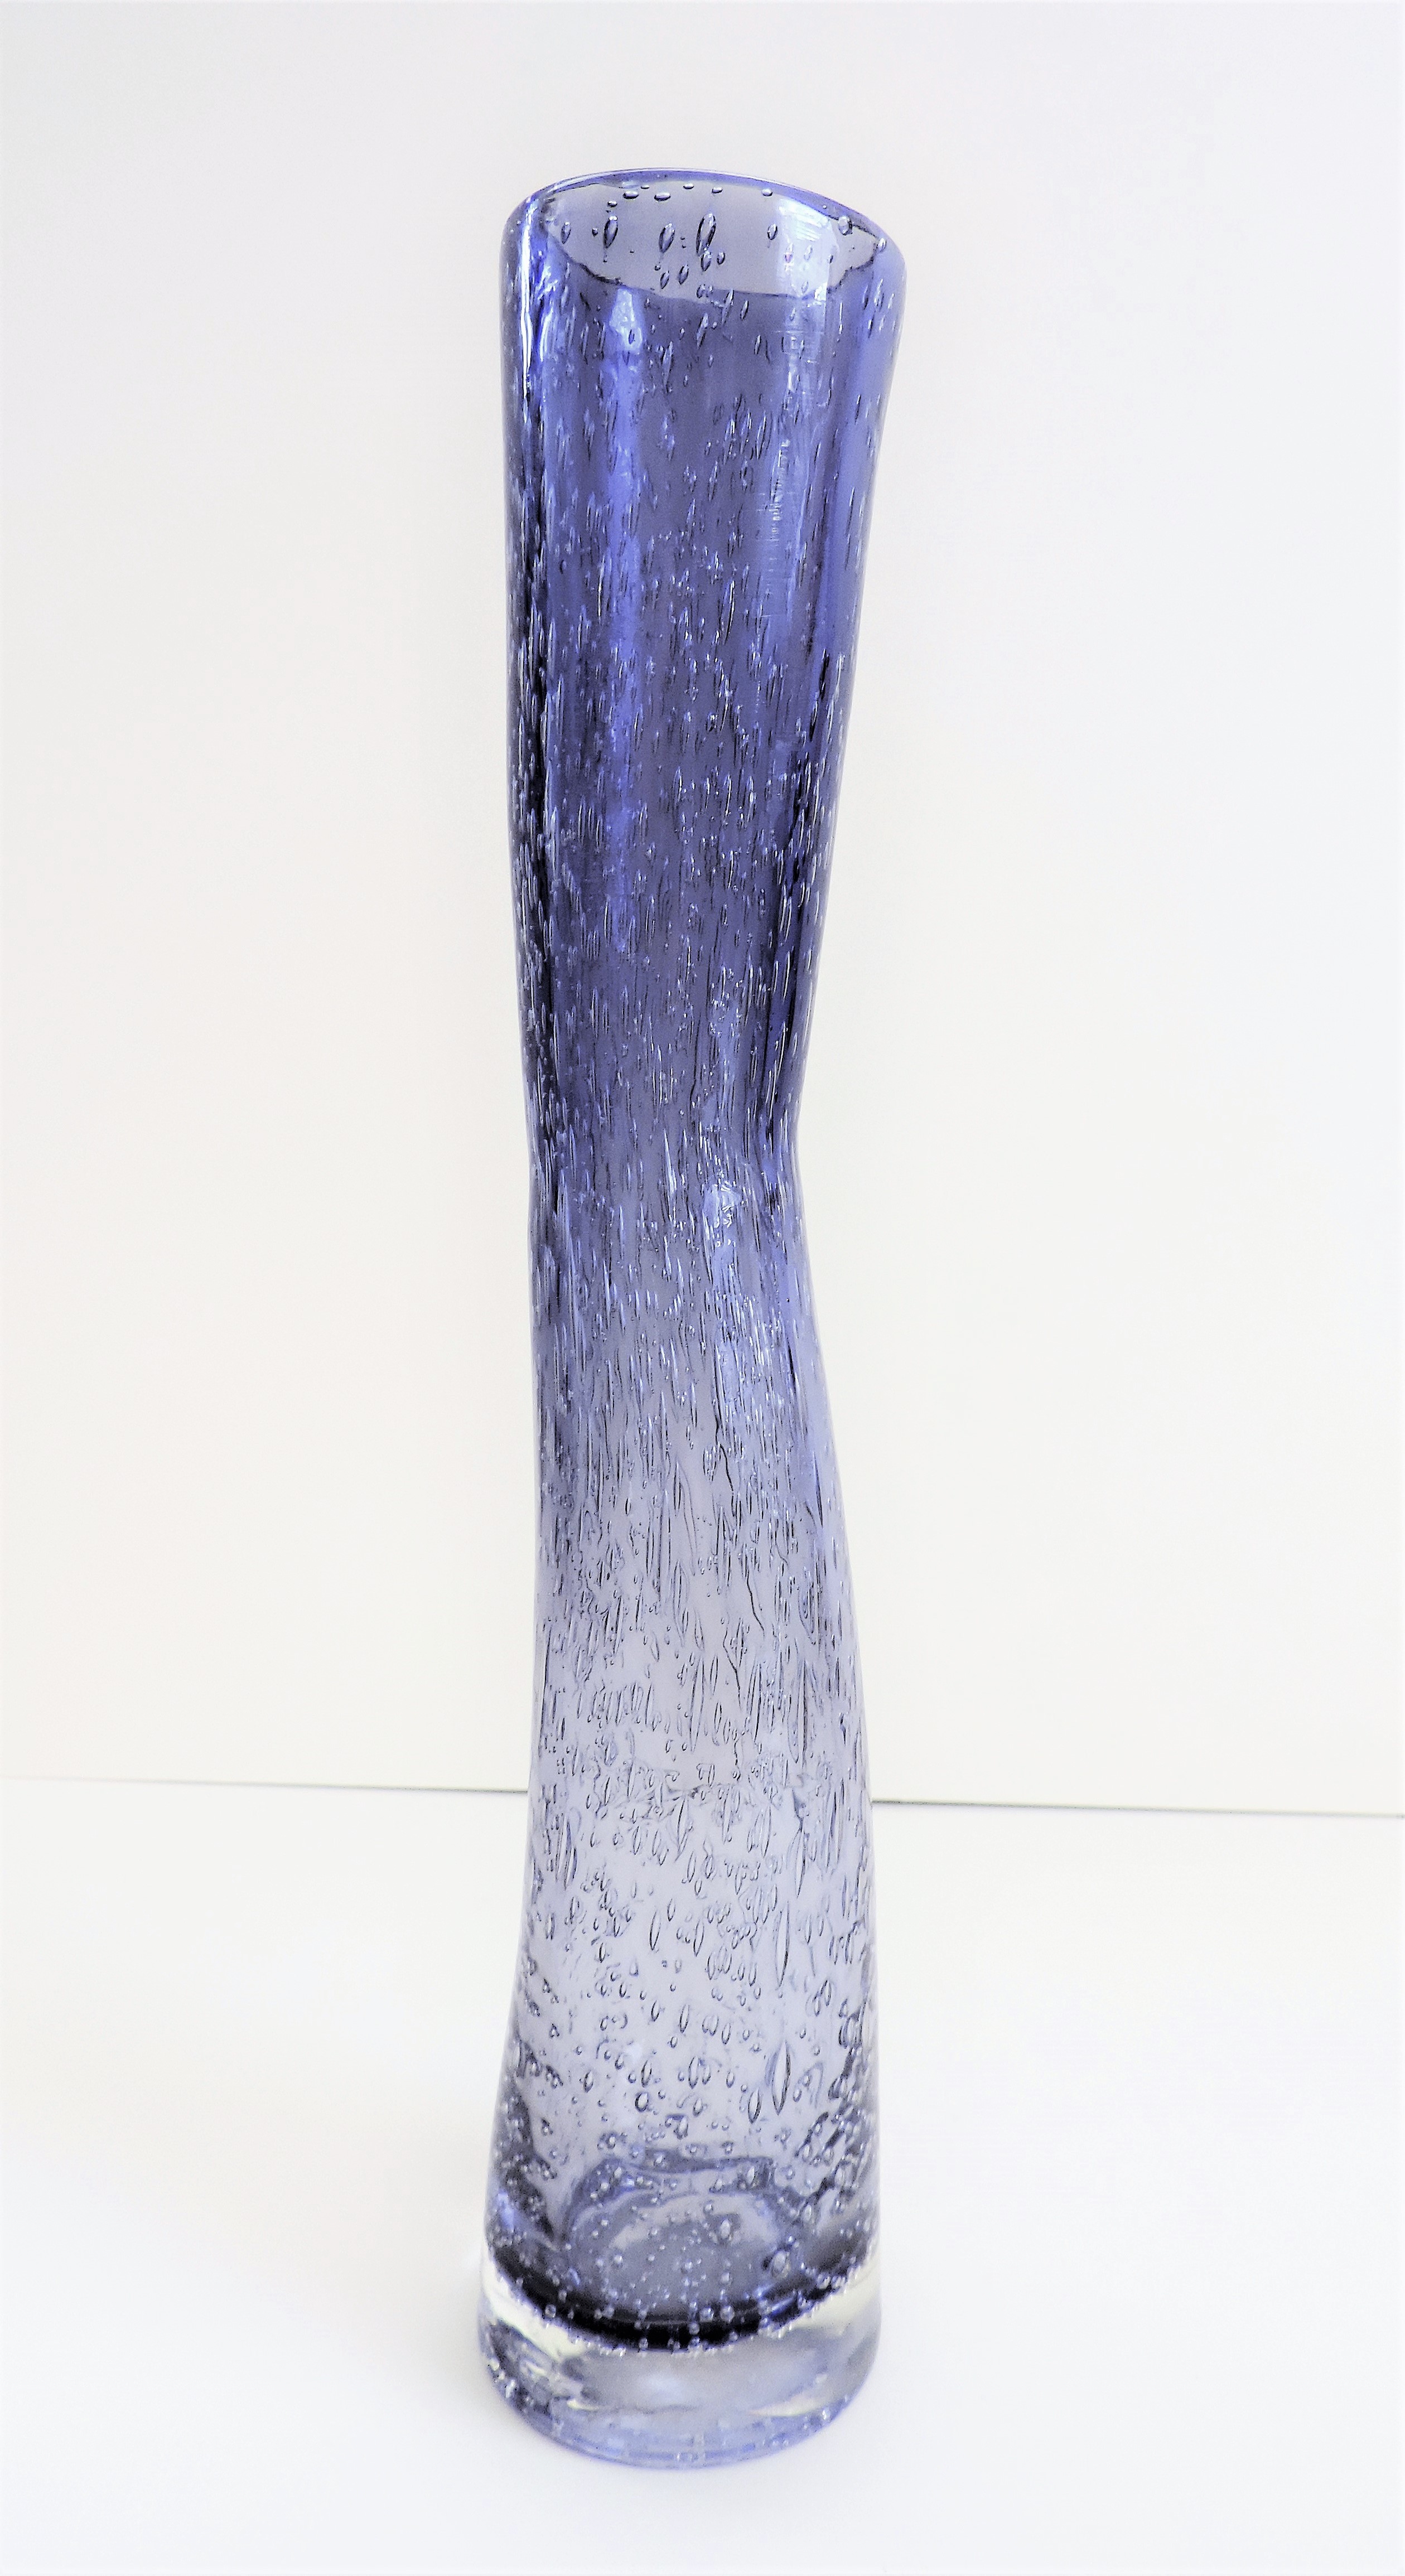 Wonky Art Glass Vase 29cm tall - Image 2 of 5